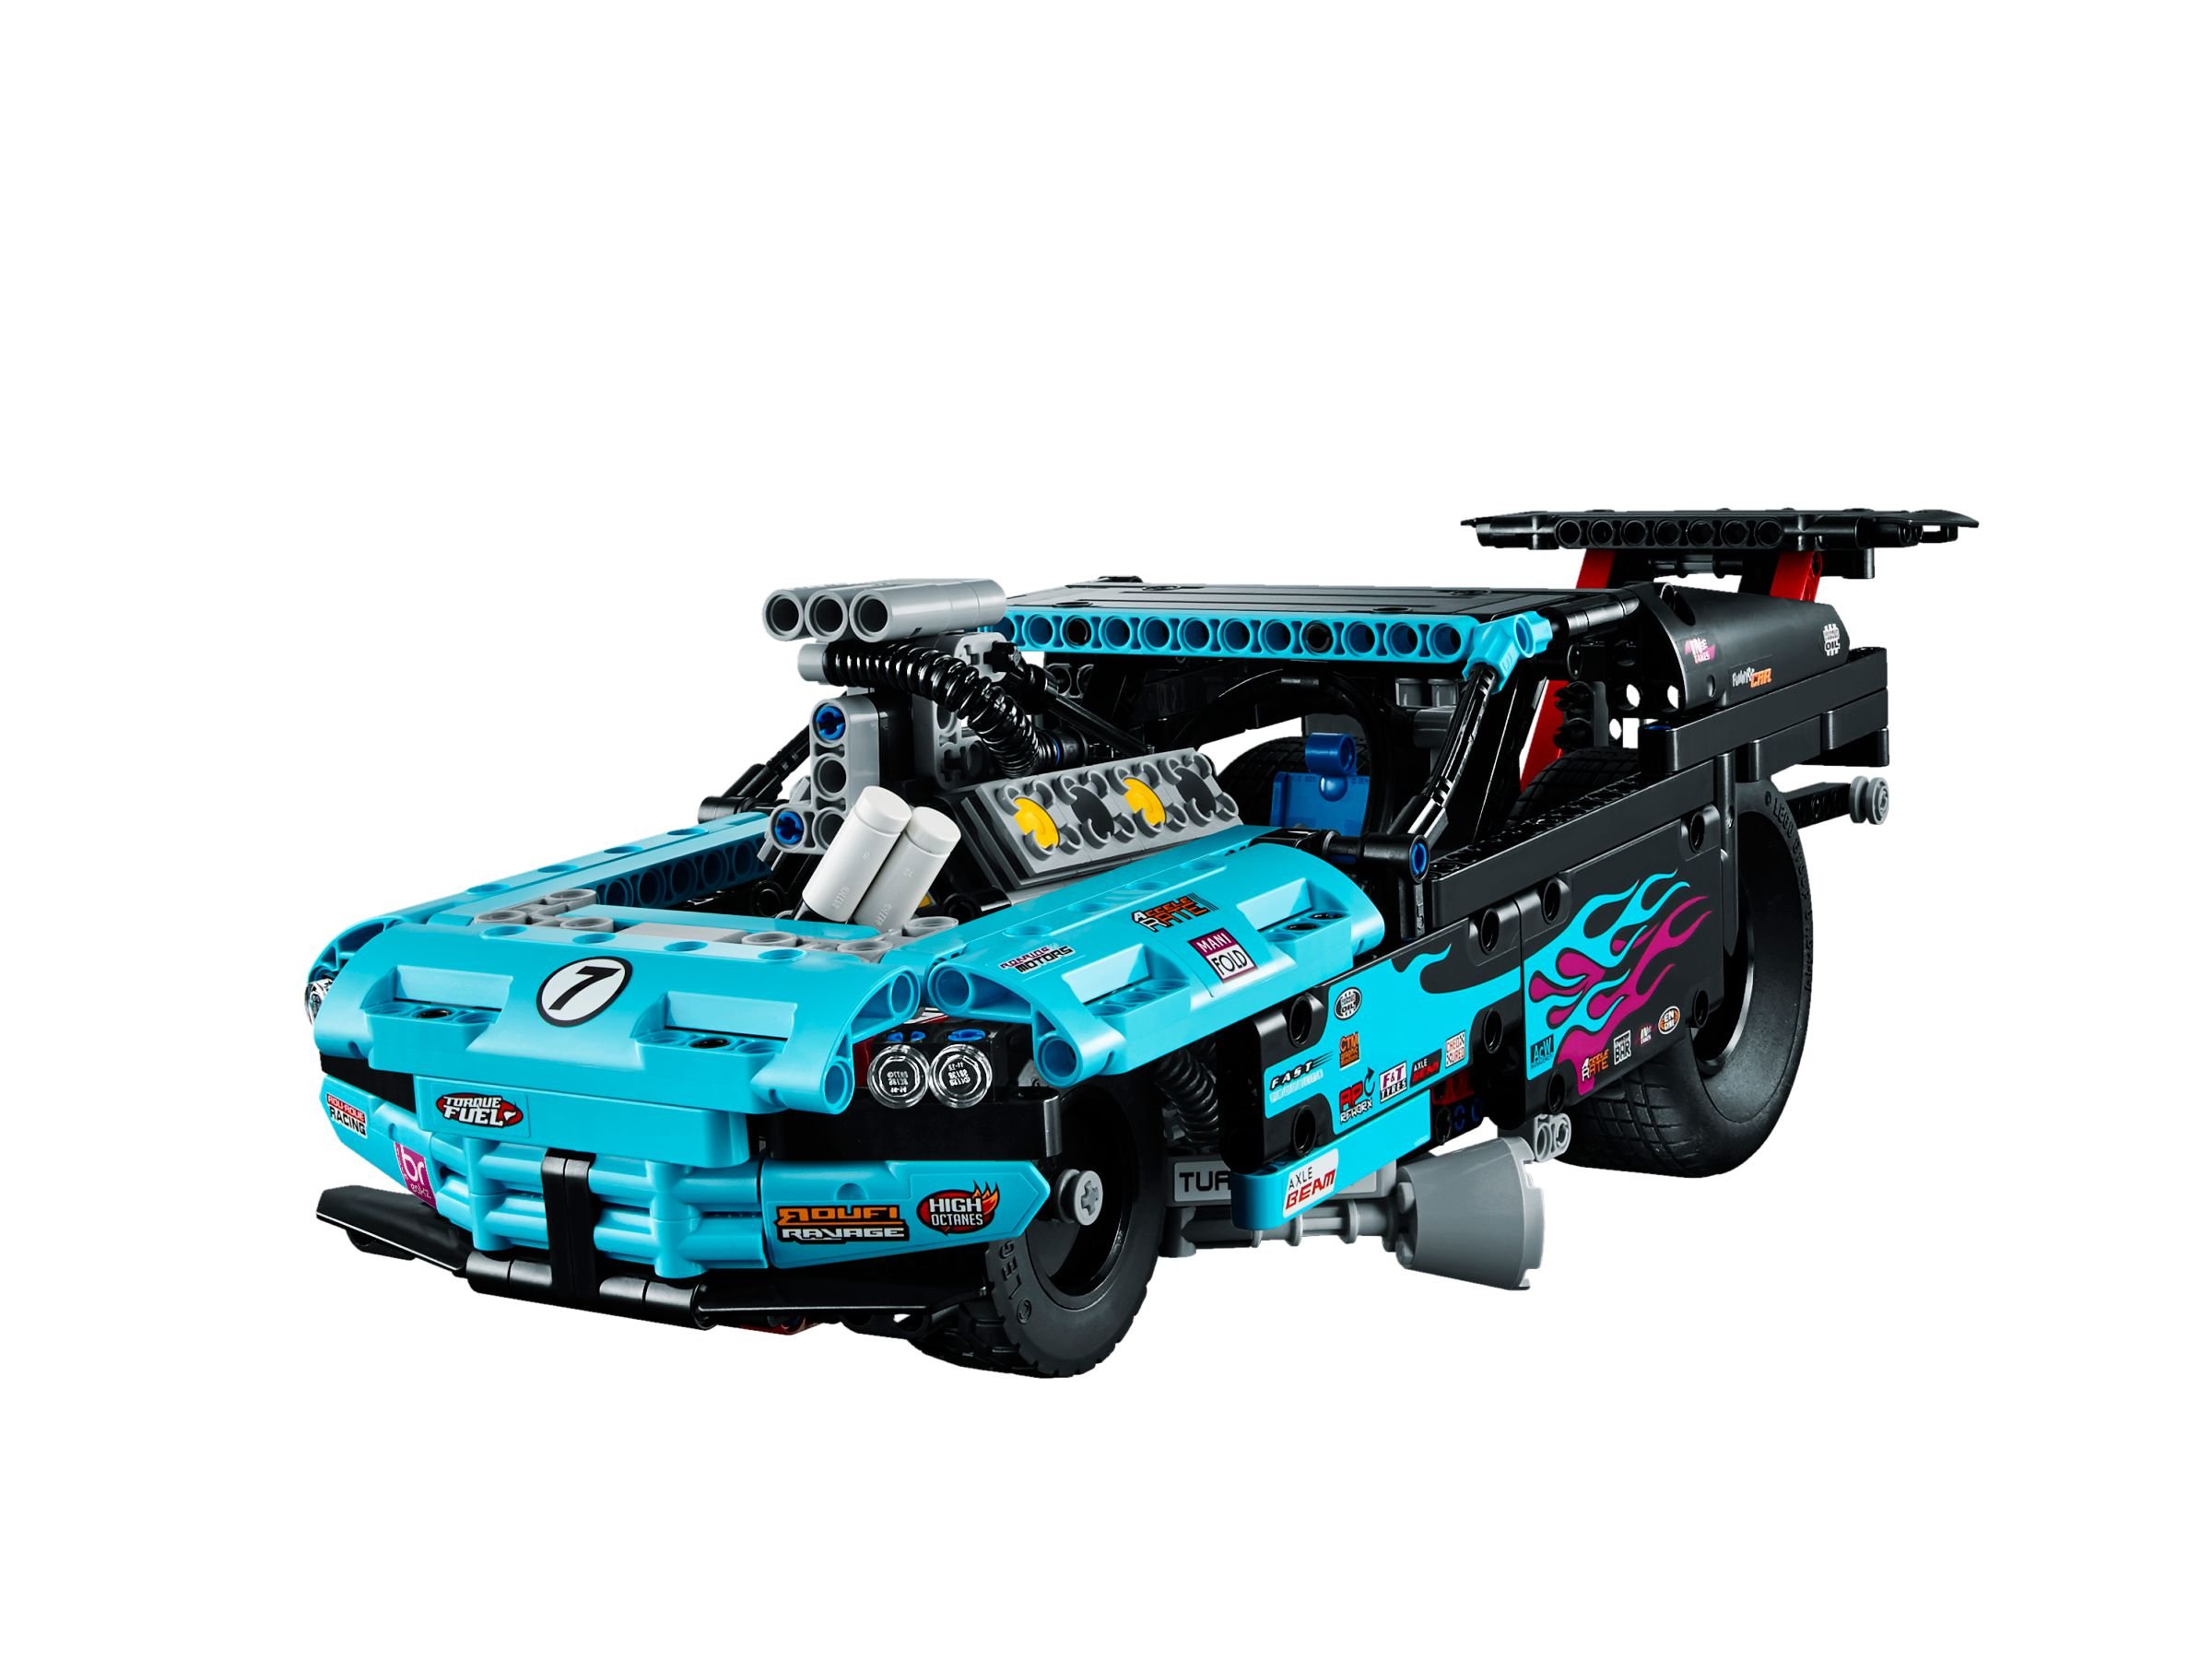 LEGO Technic 42050 Drag Racer LEGO_42050_alt7.jpg